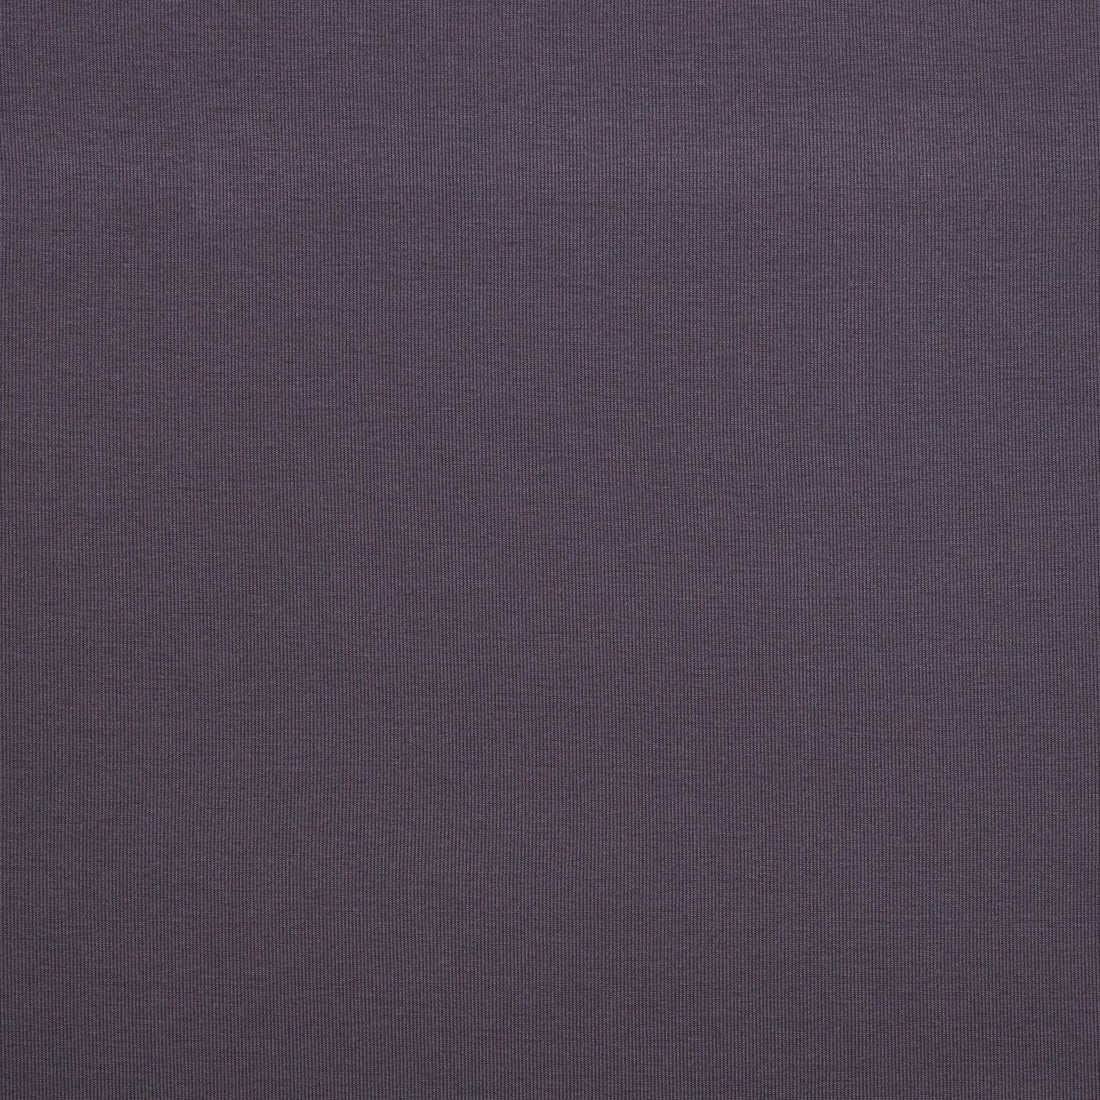 Rayon Blend - Chloe - Rib Sweater Knit - Assorted